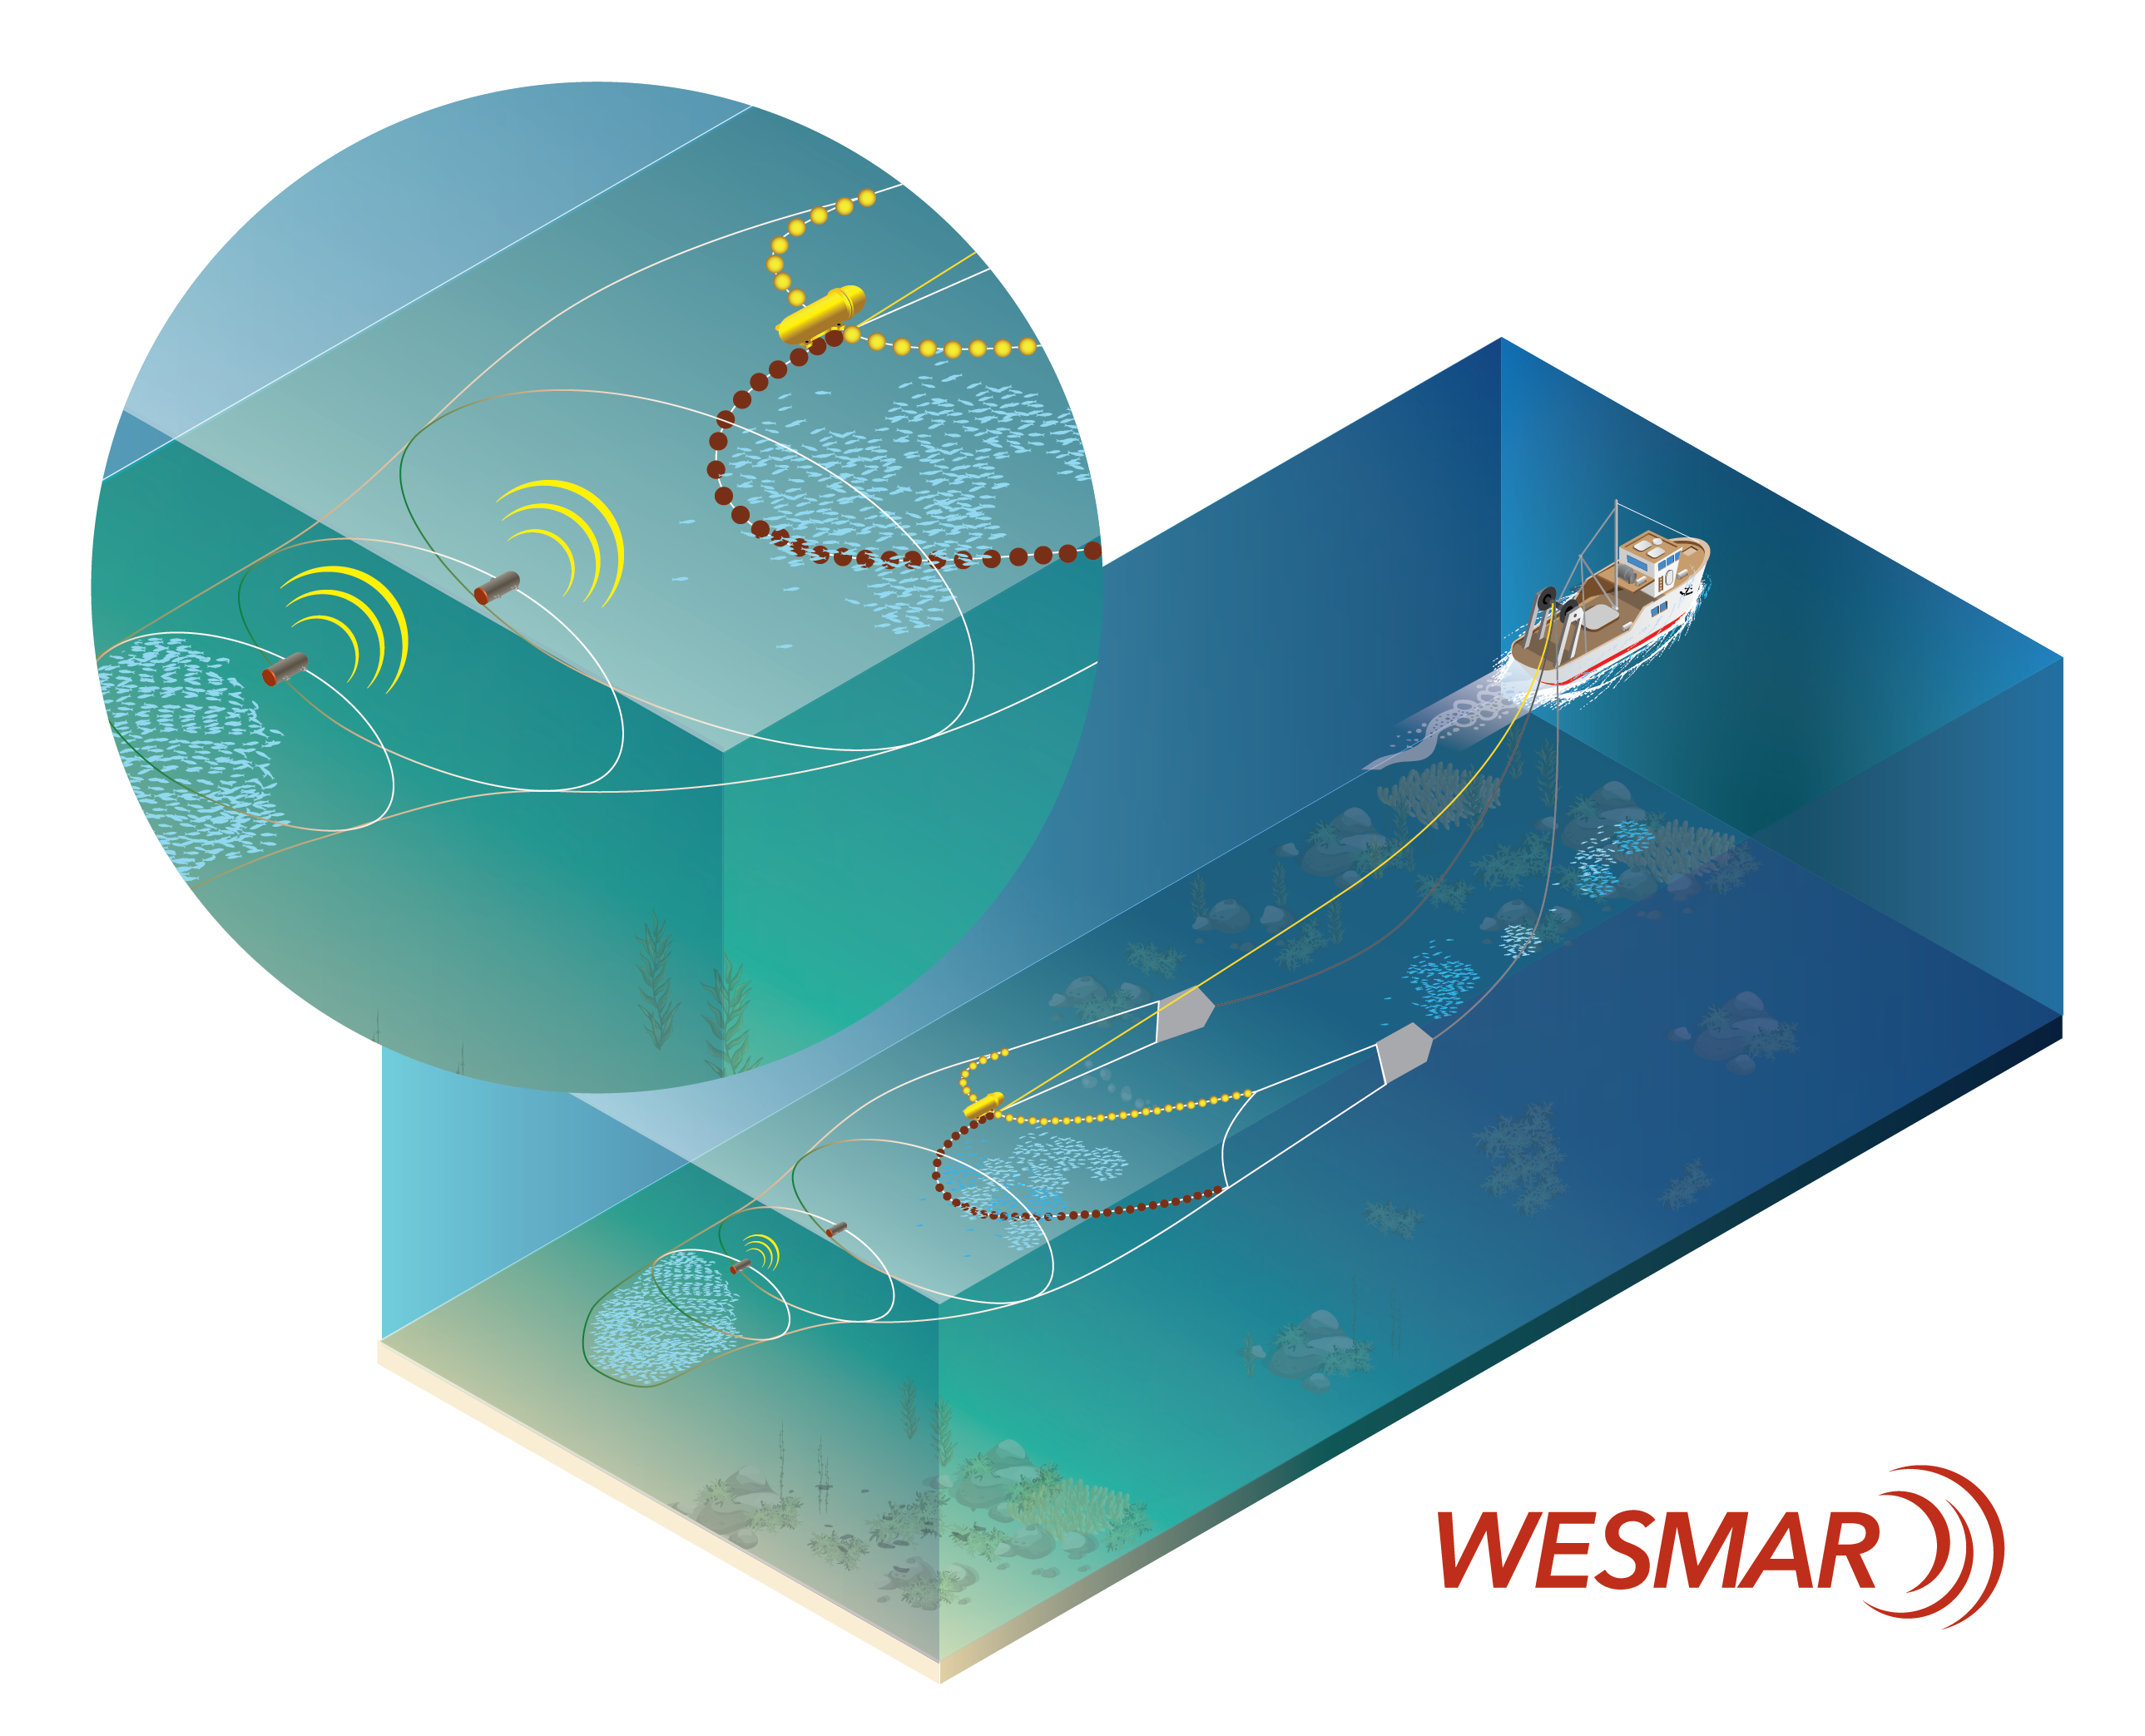 Catch Sensor Placement on Trawl Net